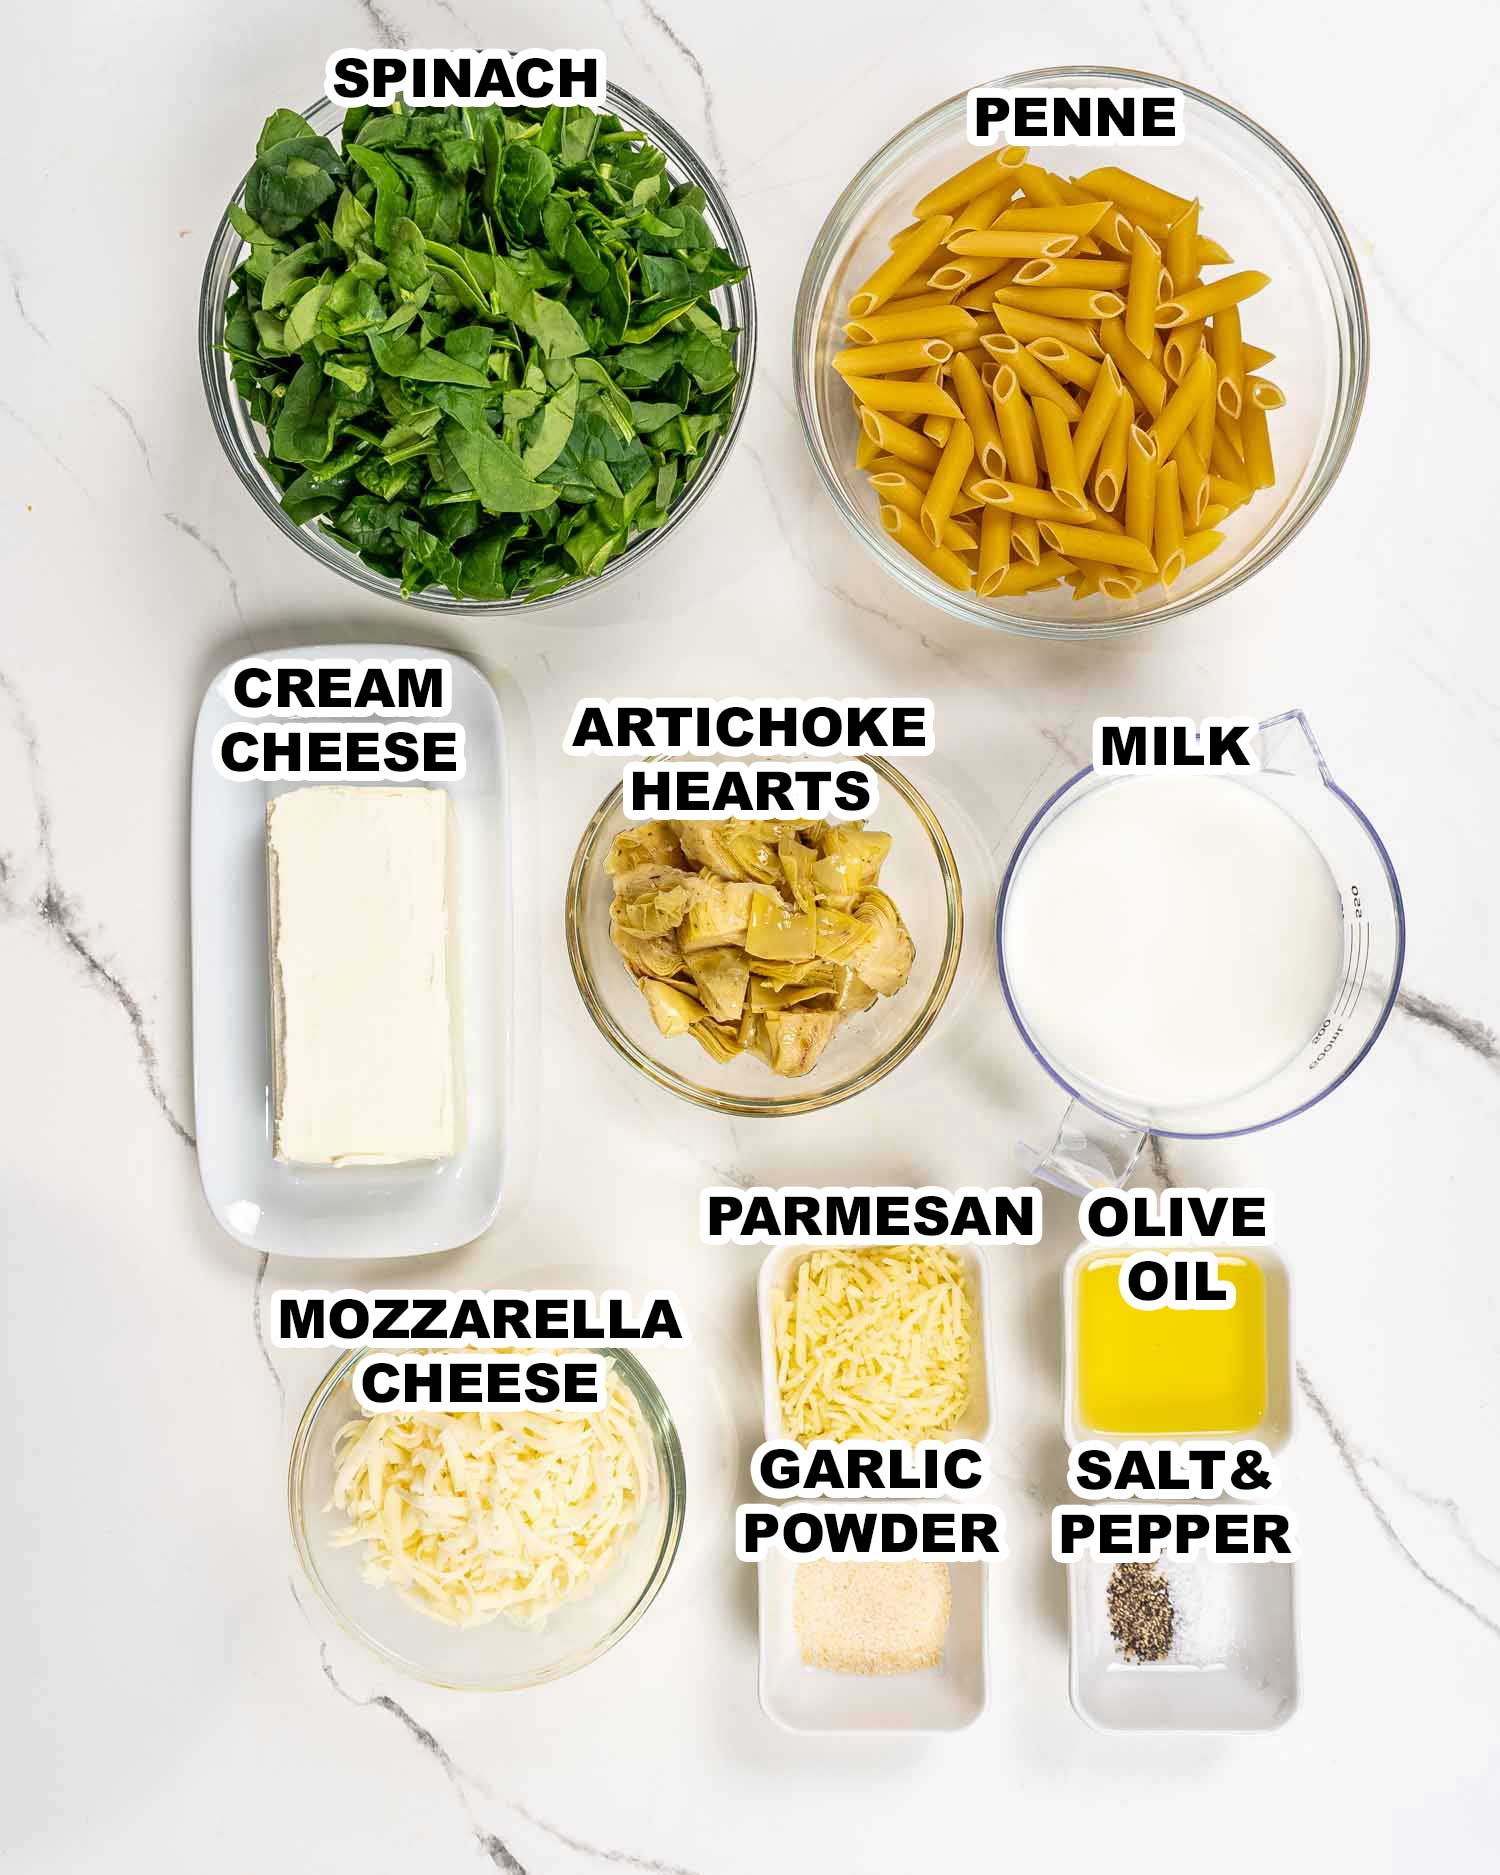 ingredients needed to make spinach artichoke pasta.